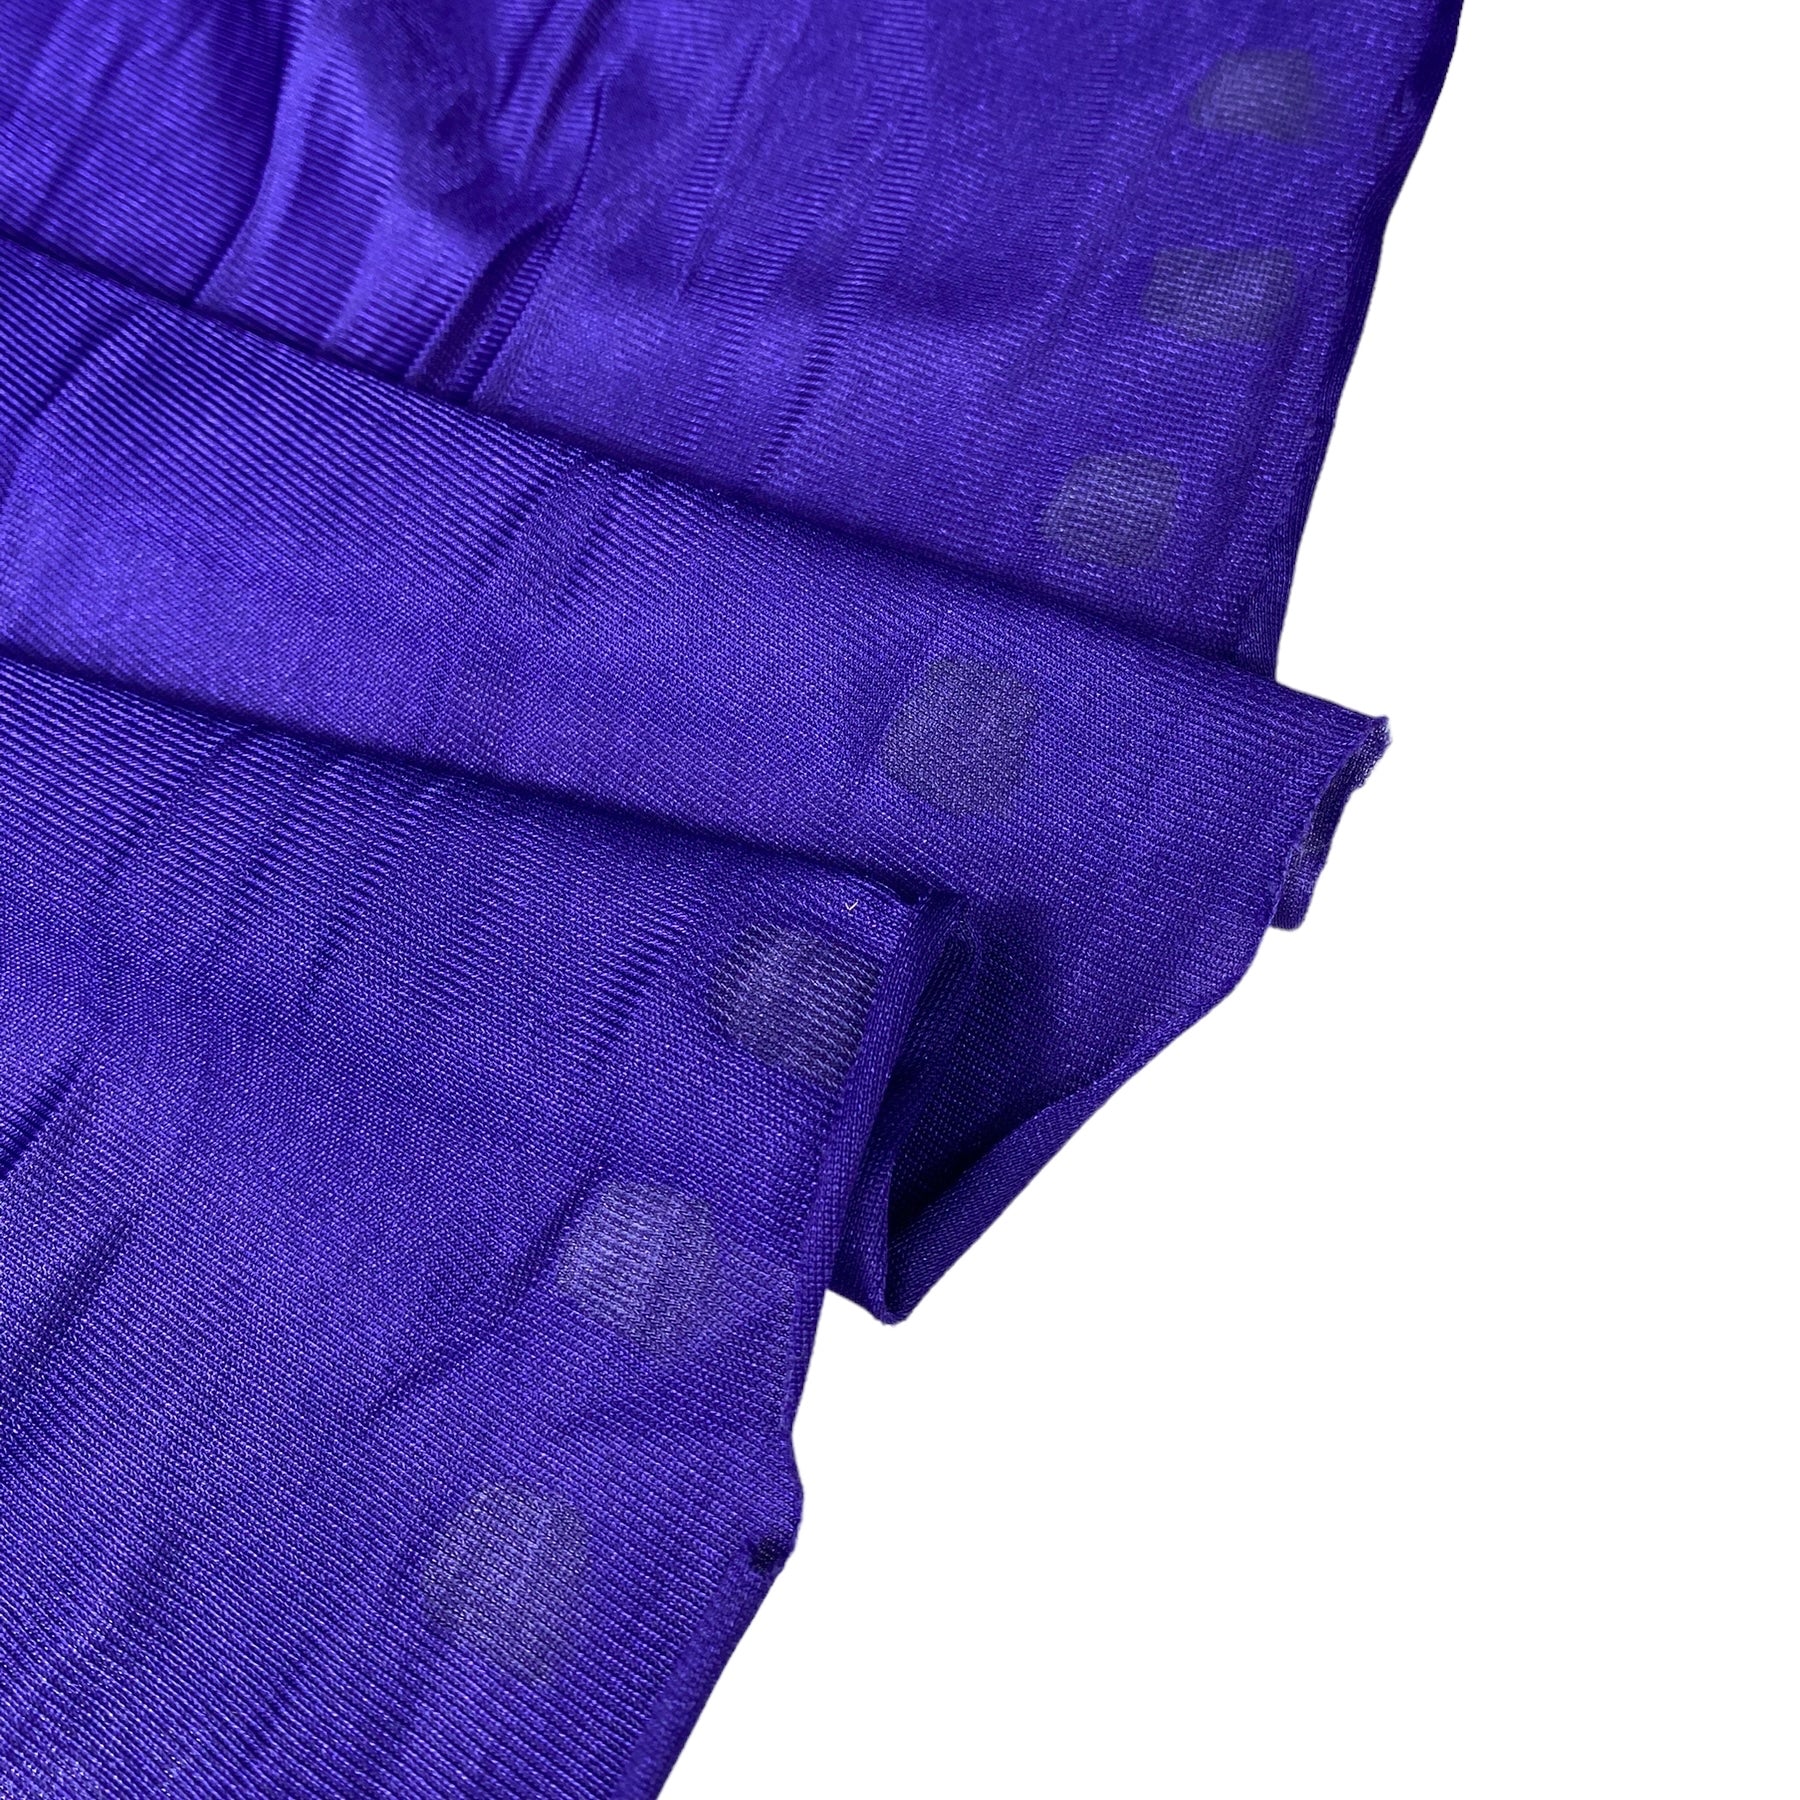 Tricot Knit Lining - Purple